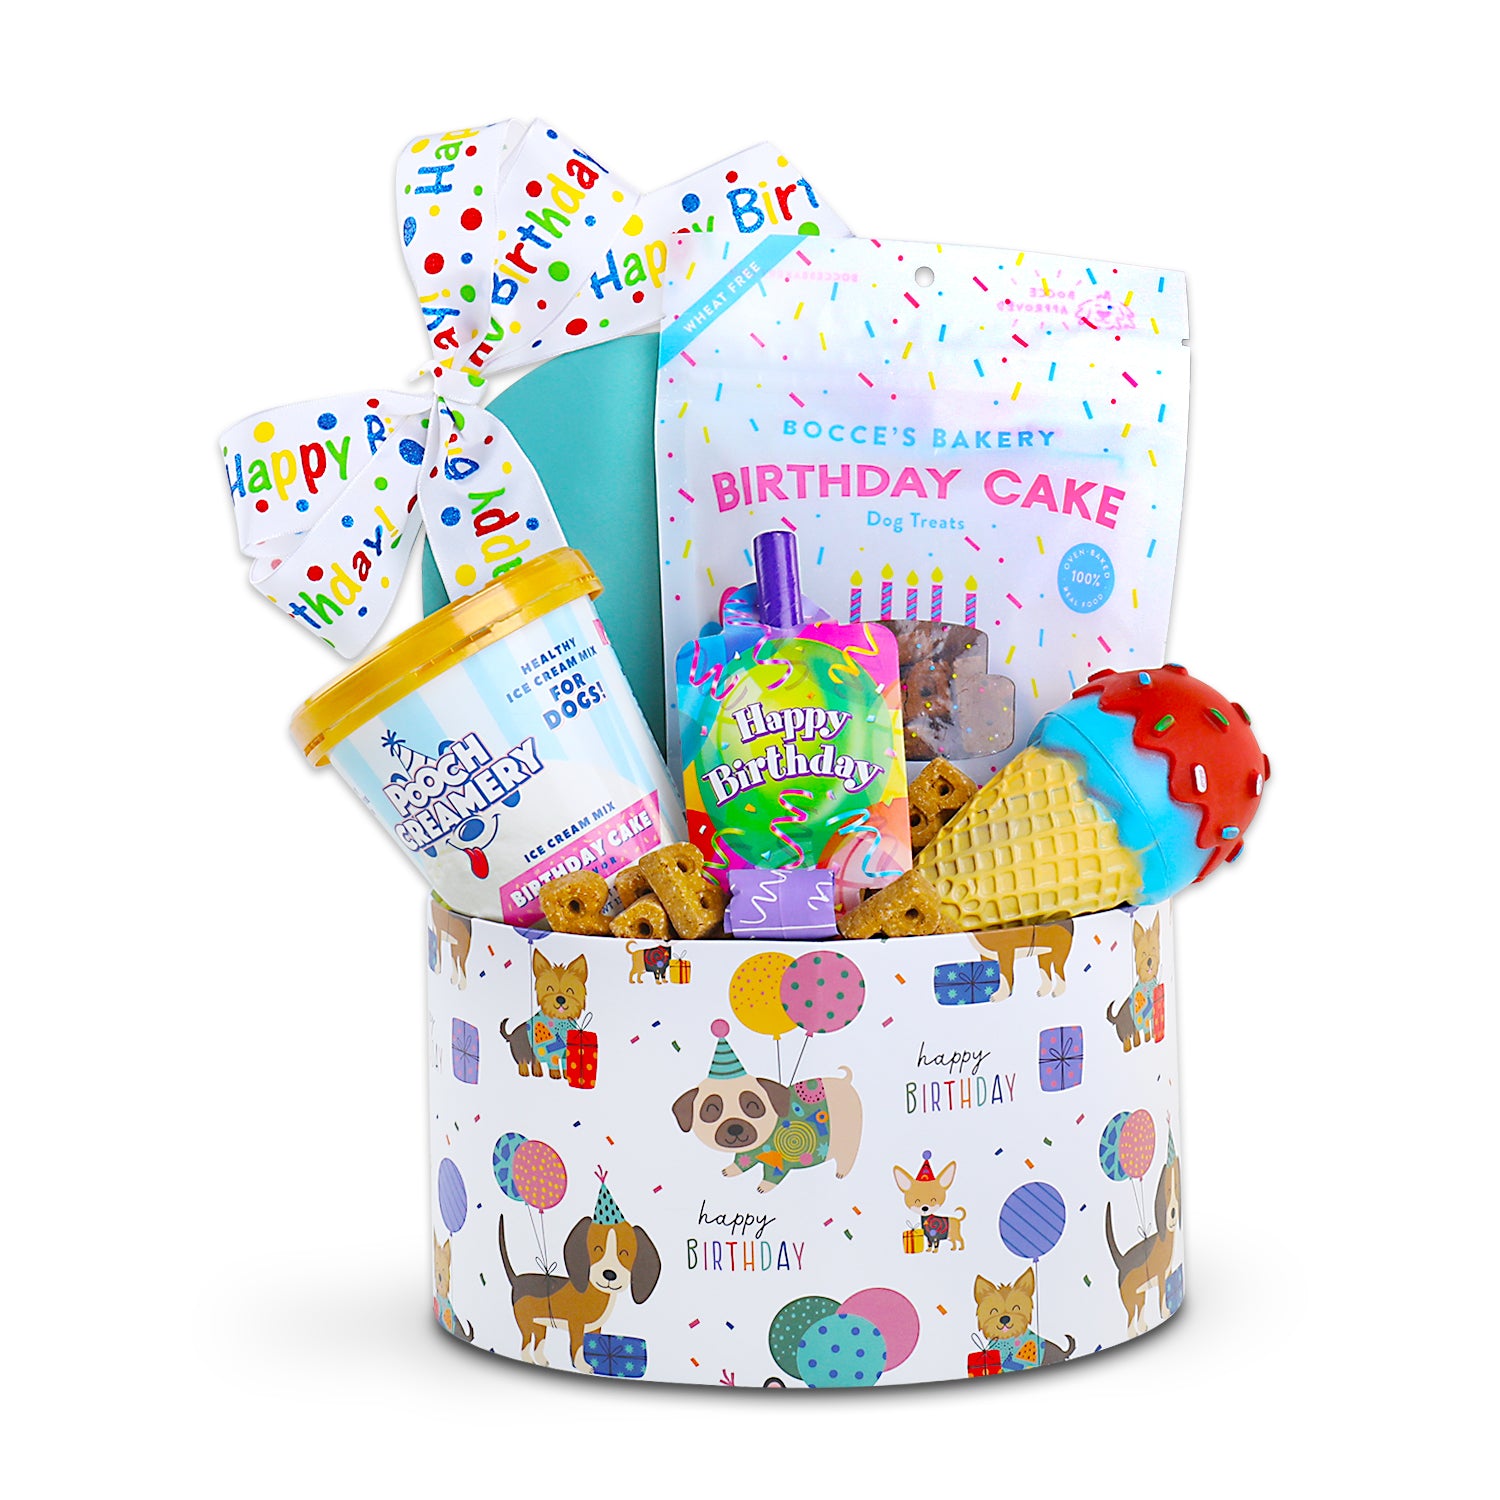 Bocce’s Bakery Birthday Cake Dog Treats (5oz.), Pooch Creamery Birthday Cake Flavor Ice Cream Mix (5.25oz.), Ice Cream Cone Squeak Toy, Birthday Blowout, in dog birthday printed Oval Box